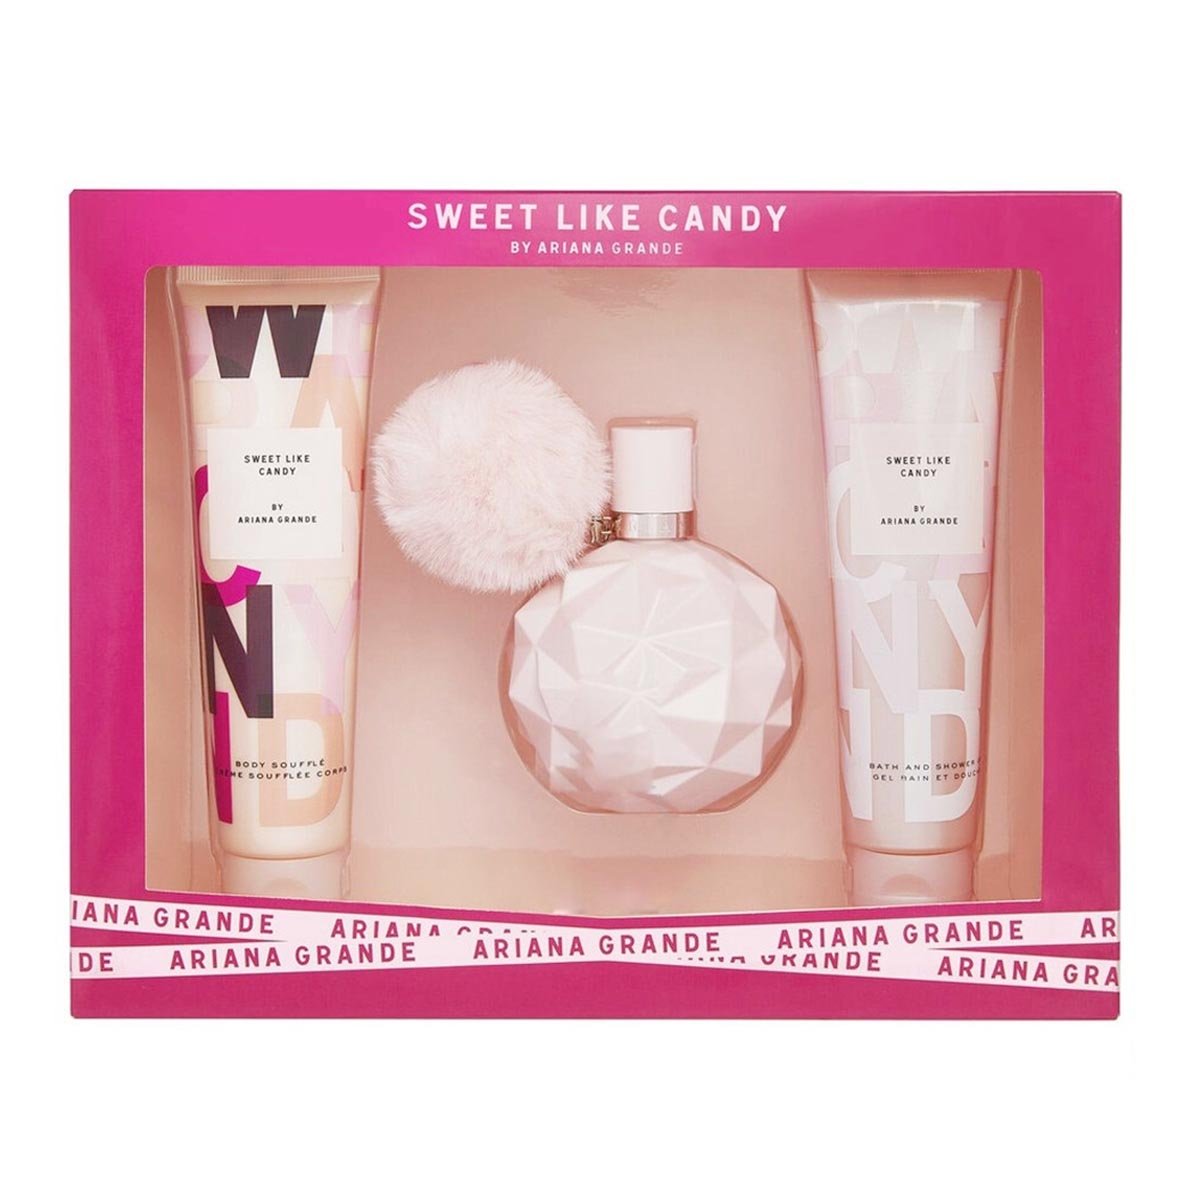 Shop Ariana Grande Sweet Like Candy Deluxe Gift Set in Australia